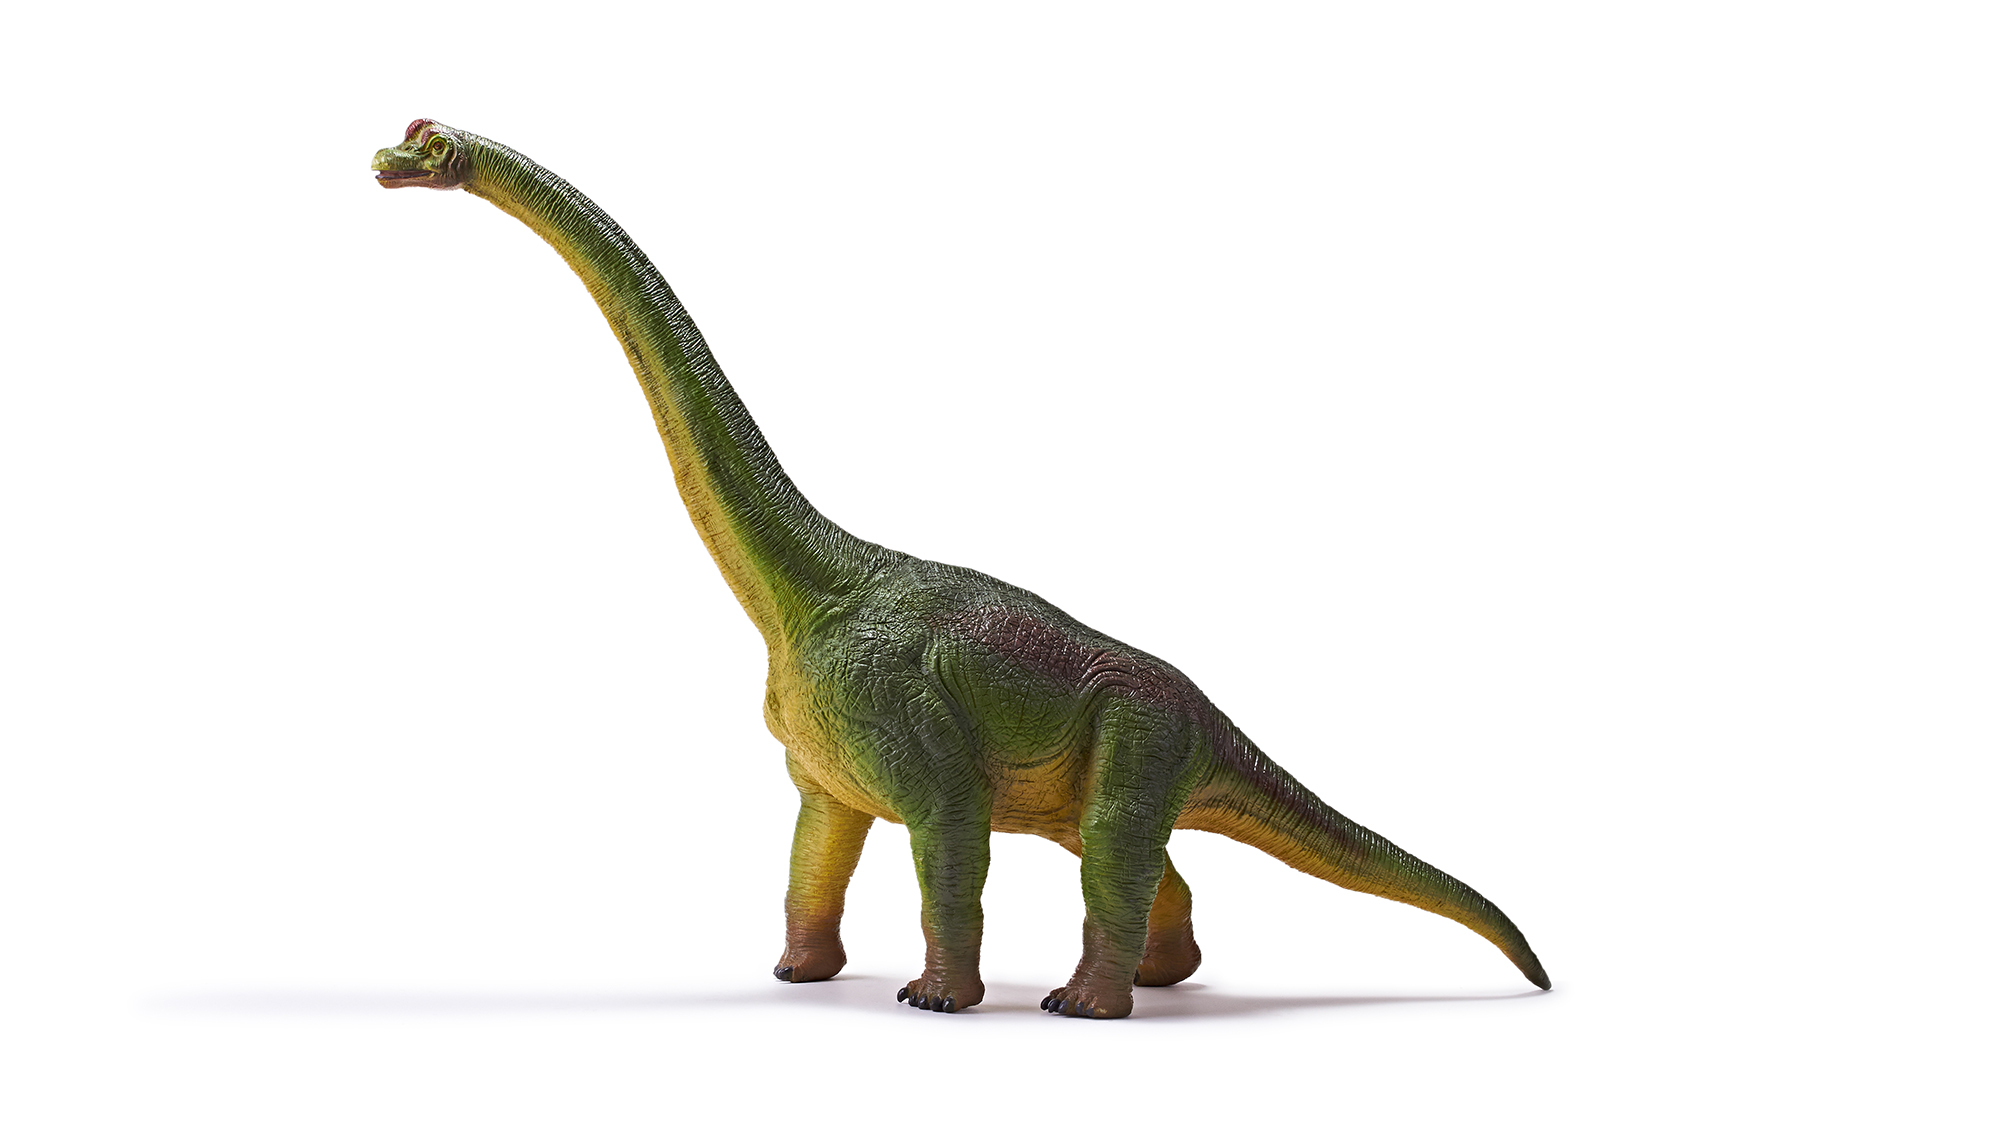 Large size dinosaur toy Brachiosaurus model